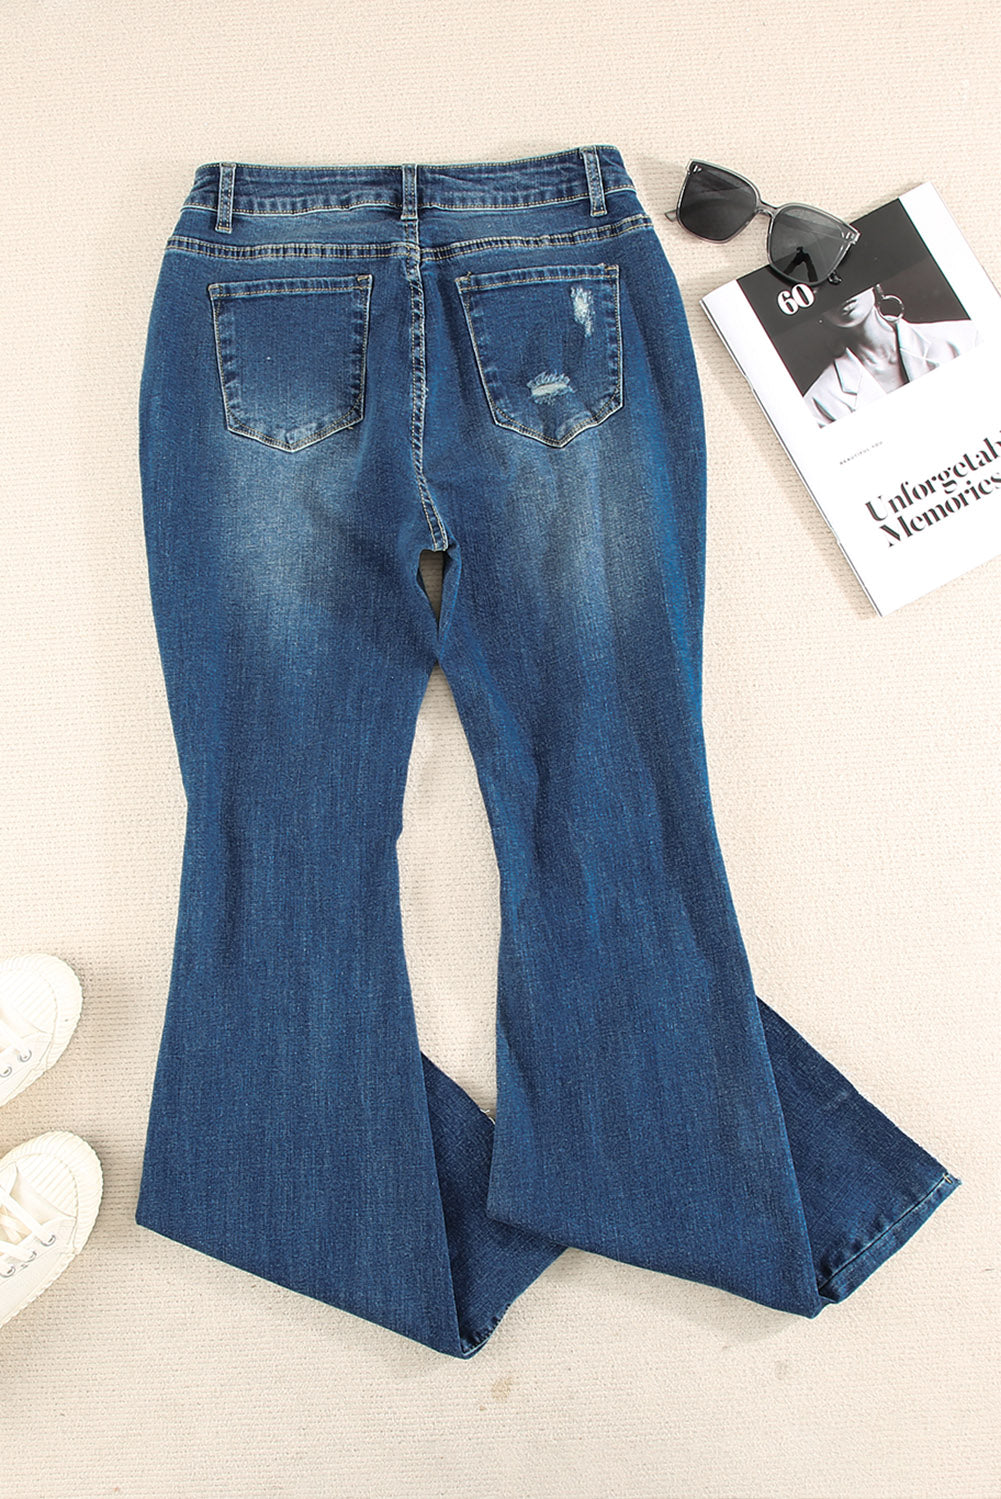 Dark Wash Mid Rise Flare Jeans Jeans JT's Designer Fashion